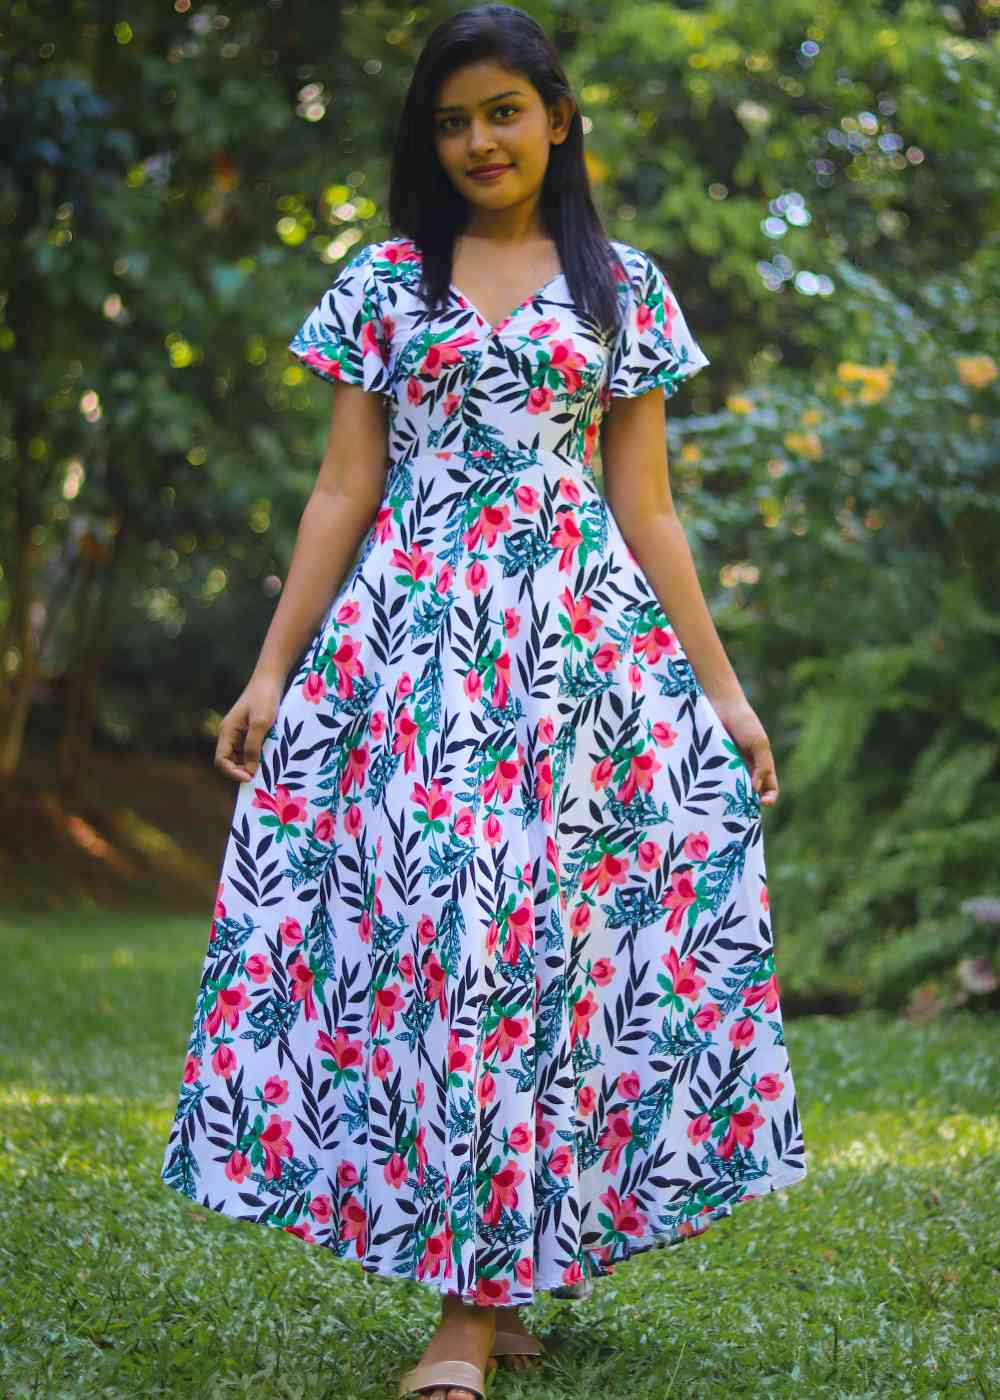 New Fashion Dresses For Girls 2021 - Sarangi Fashion